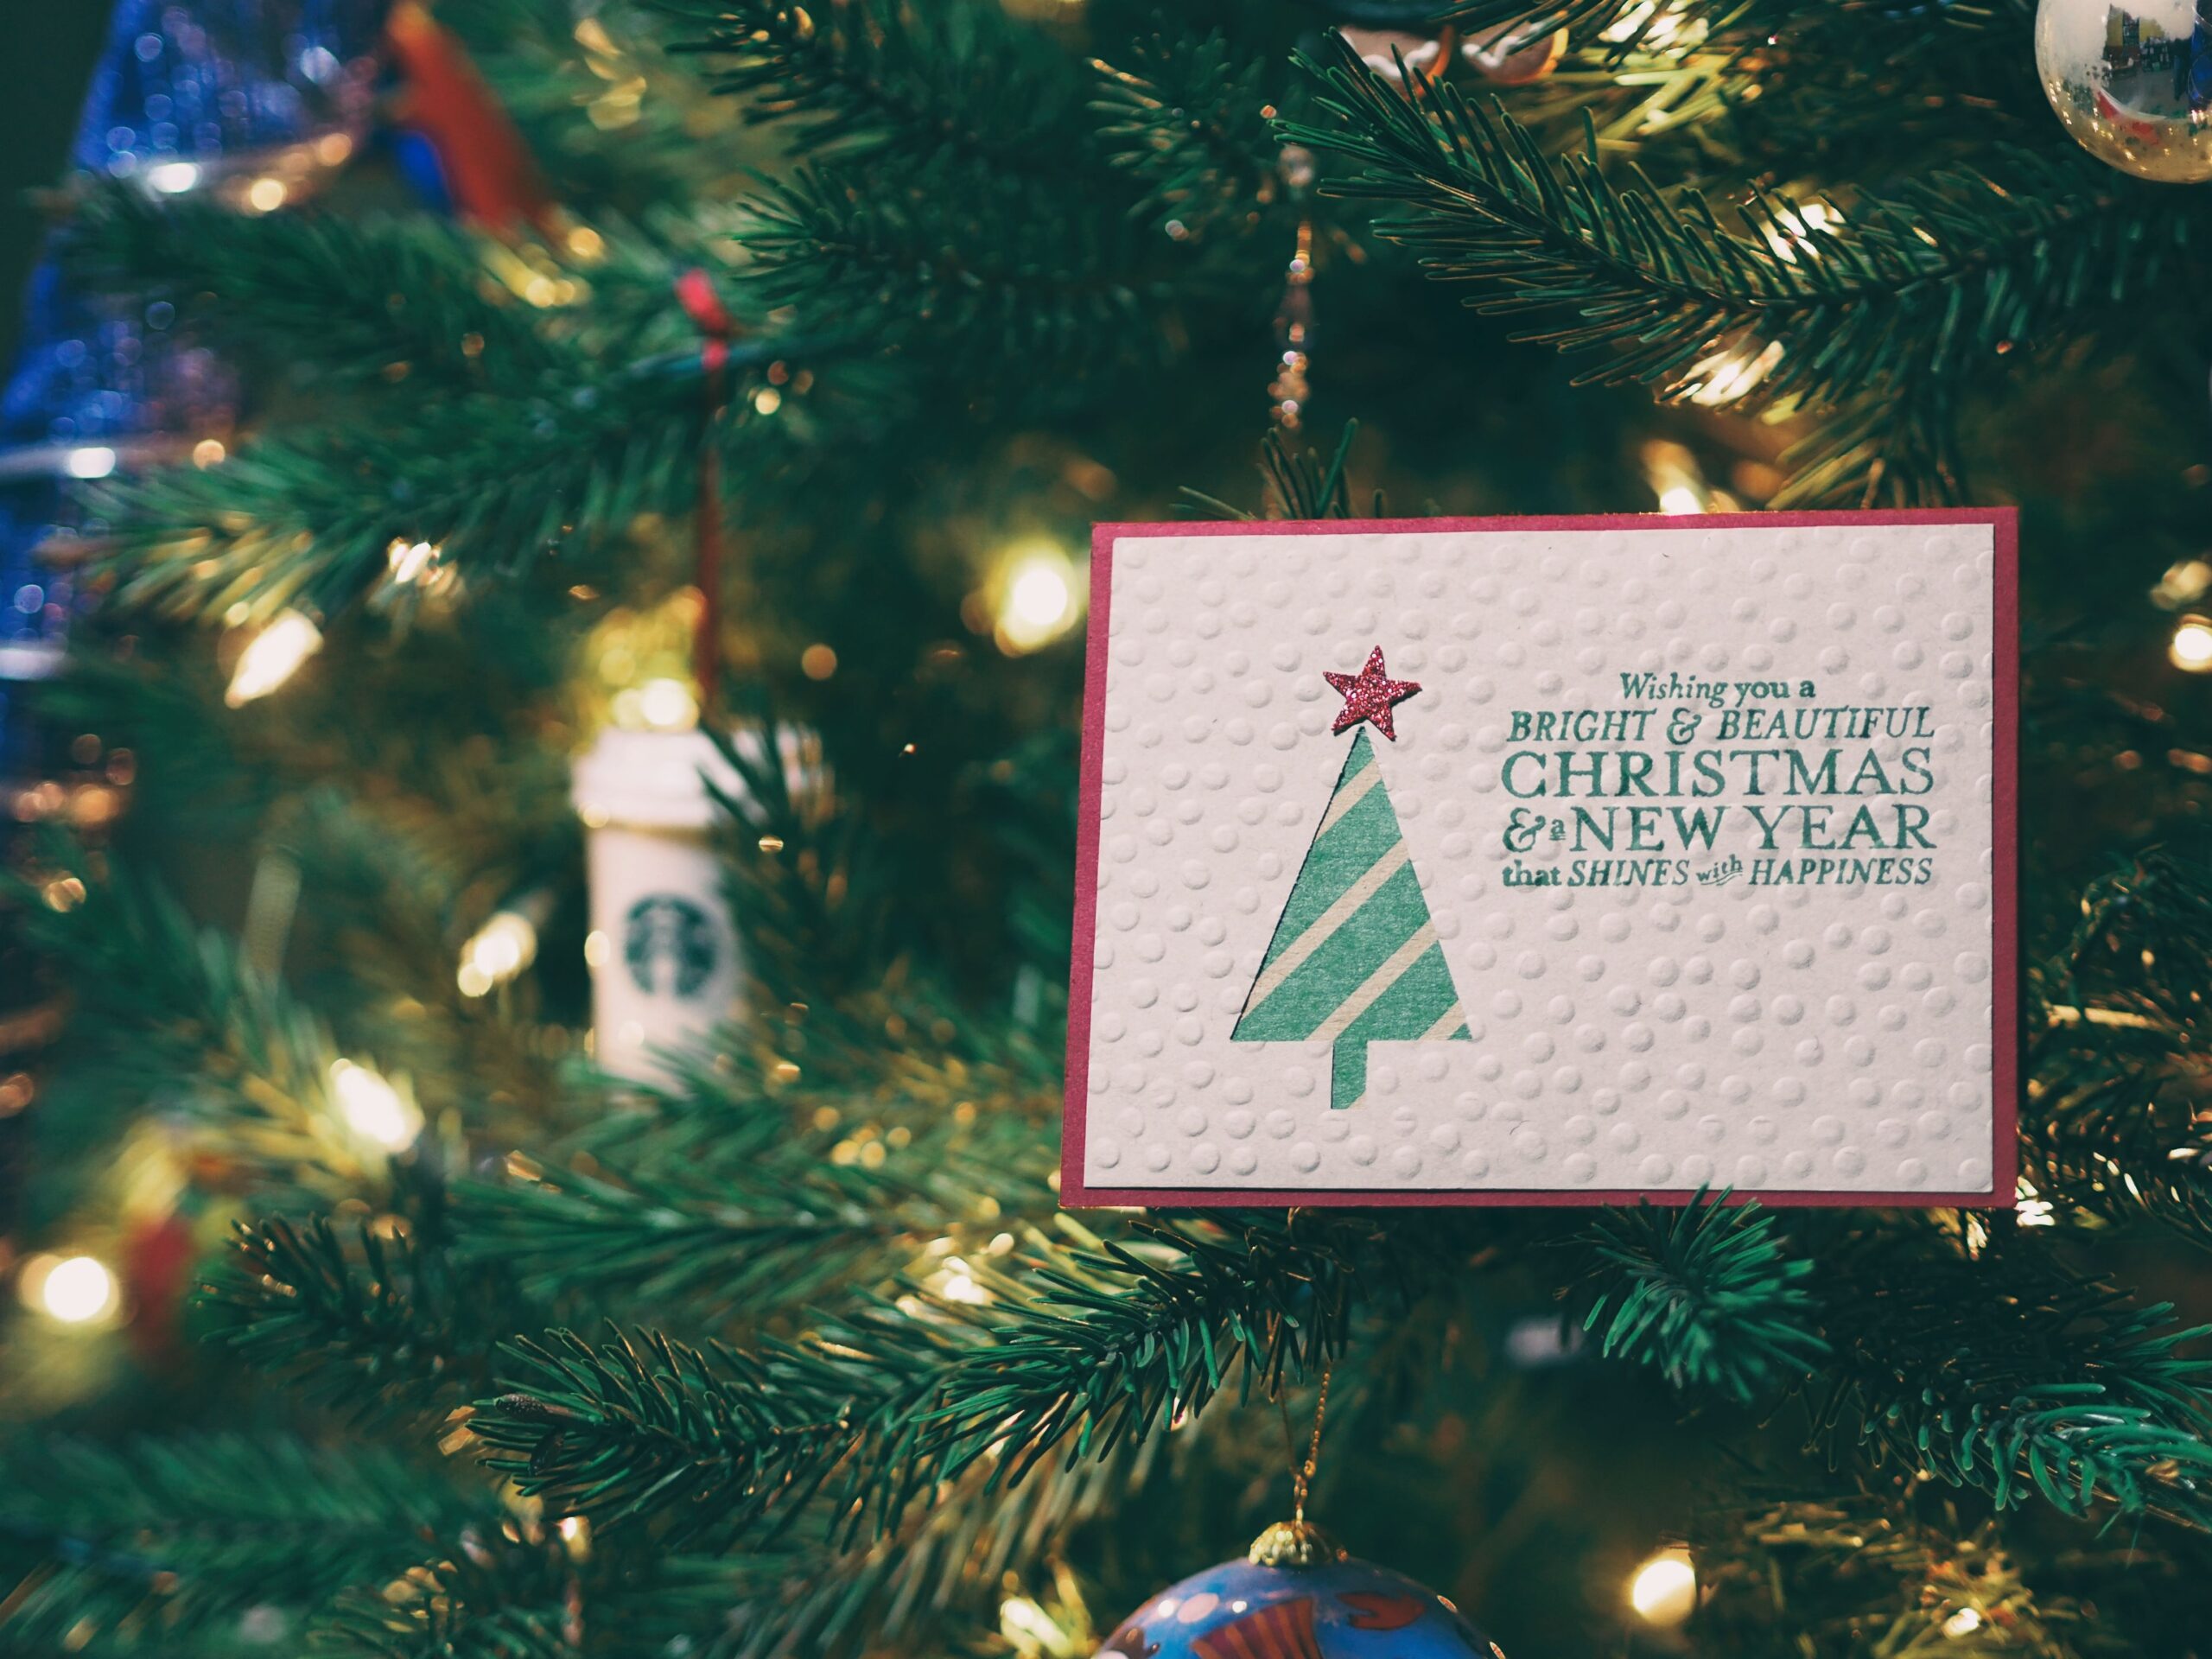 Christmas card in Christmas tree.